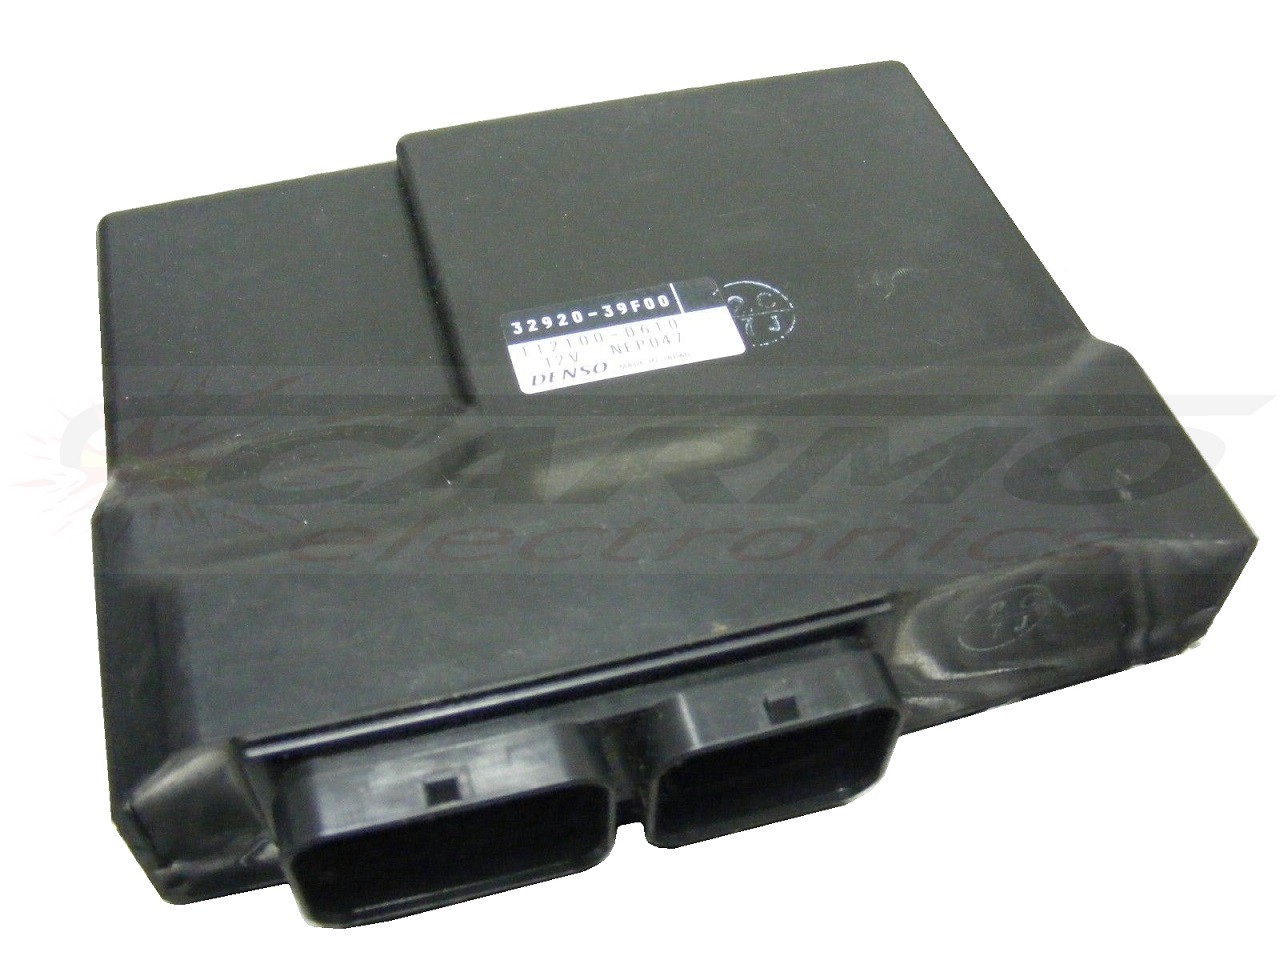 GSXR600 GSX-R 600 ECU ECM CDI black box computer brain (32920-39F00 -39F20 -39F30)